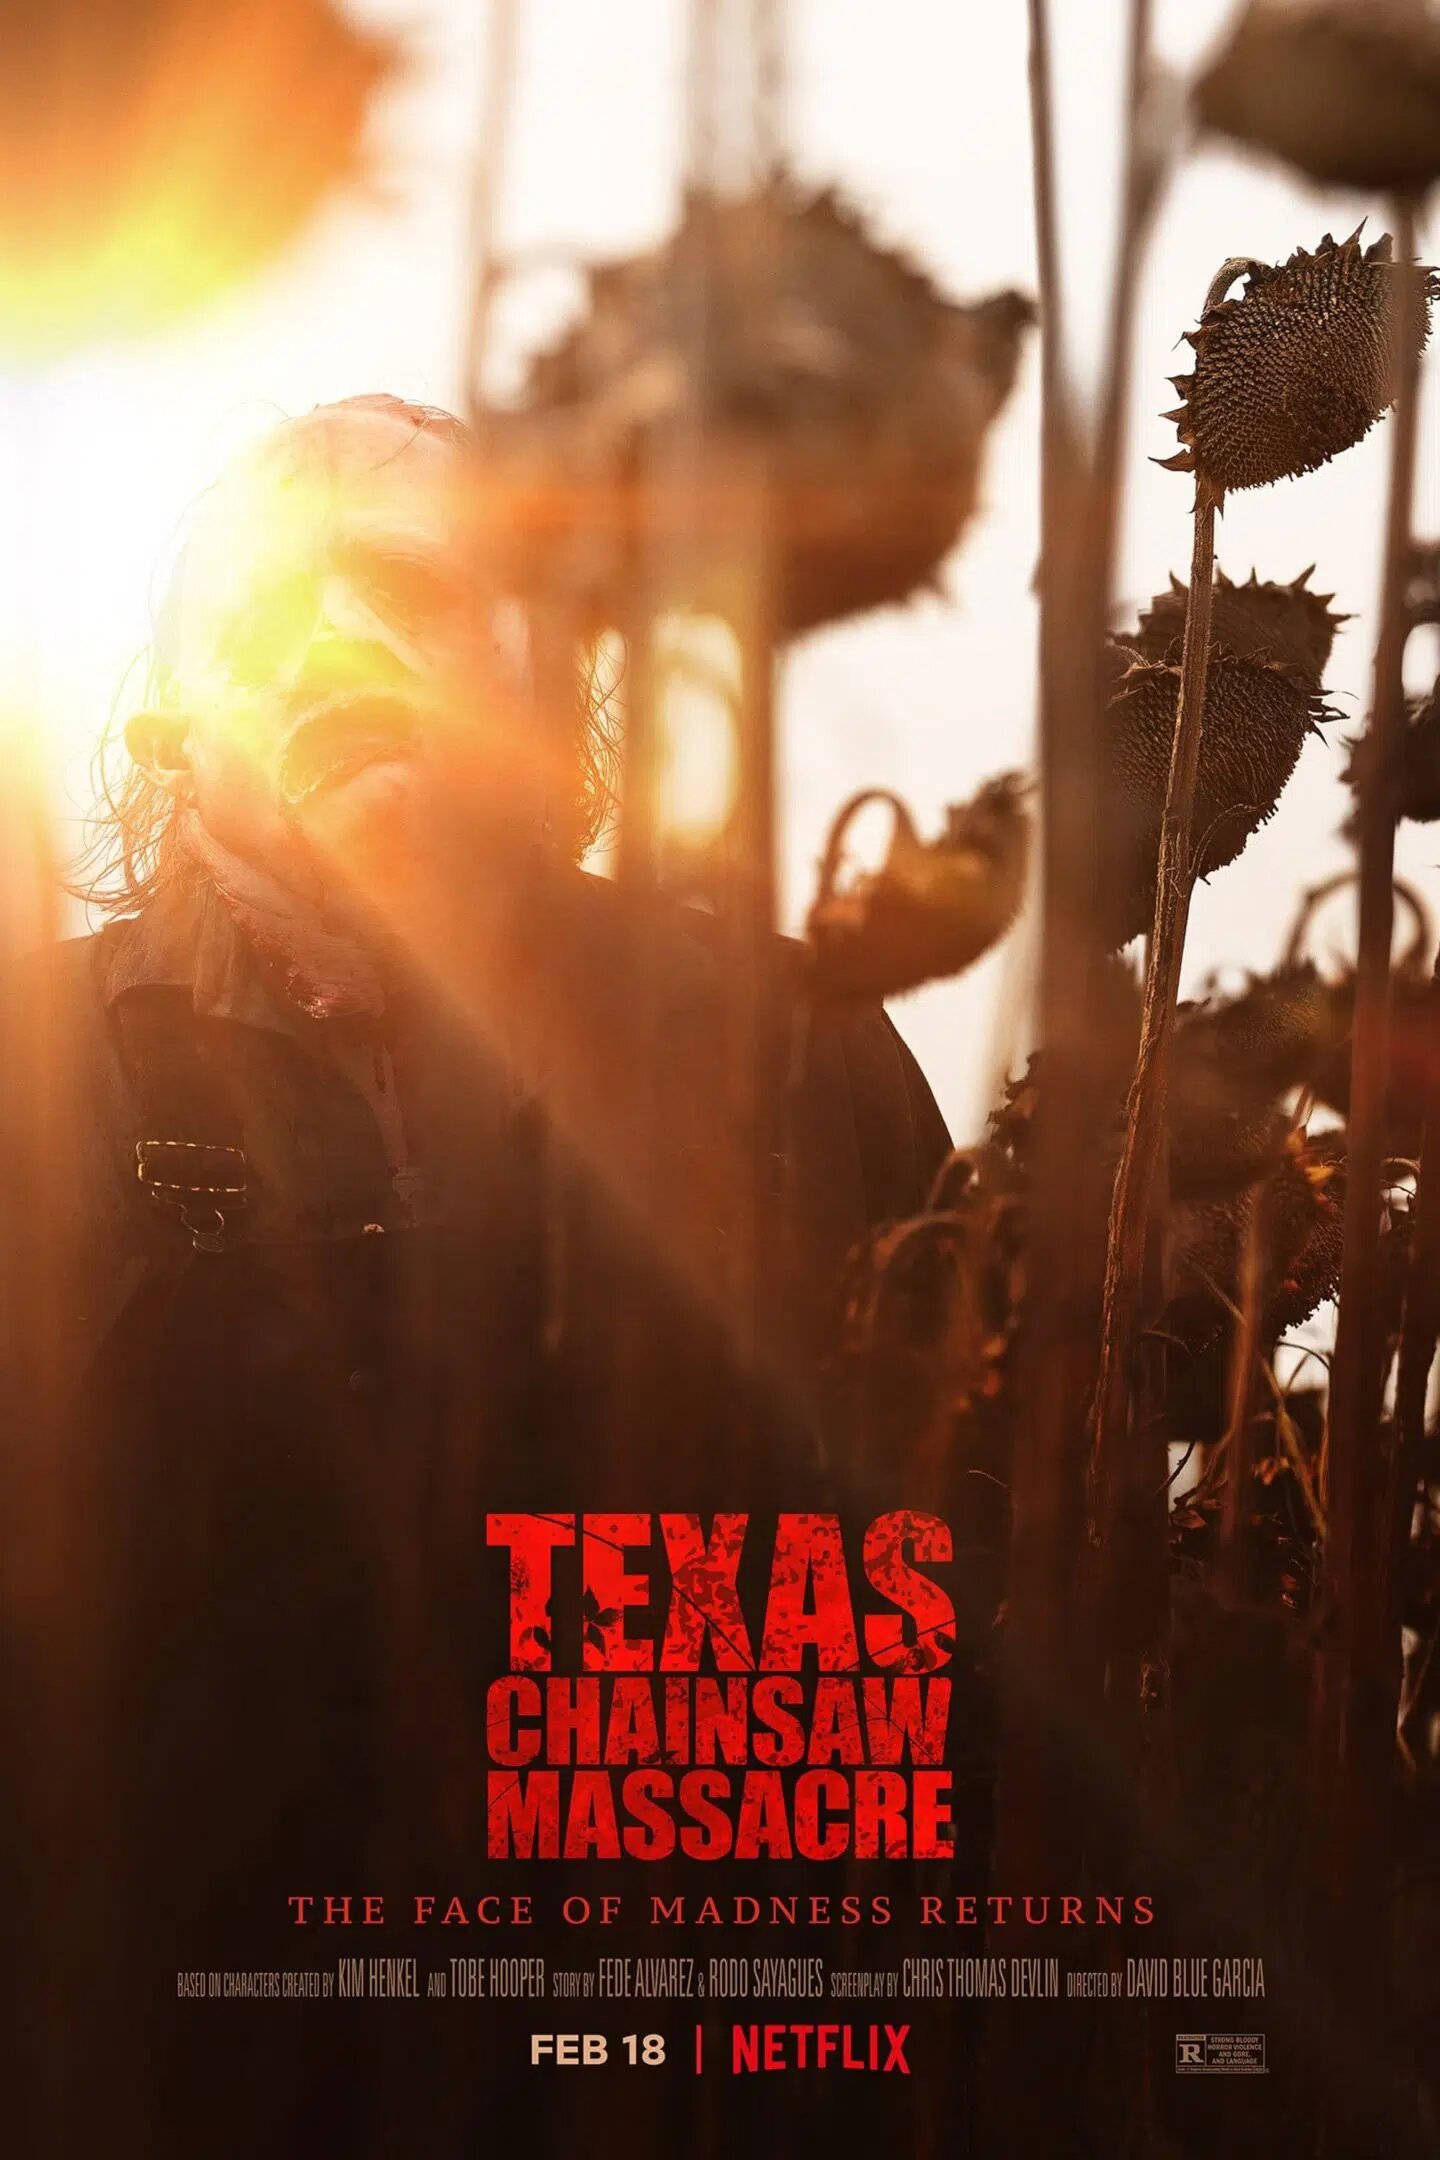 Texas Chainsaw Massacre Trailer & Poster